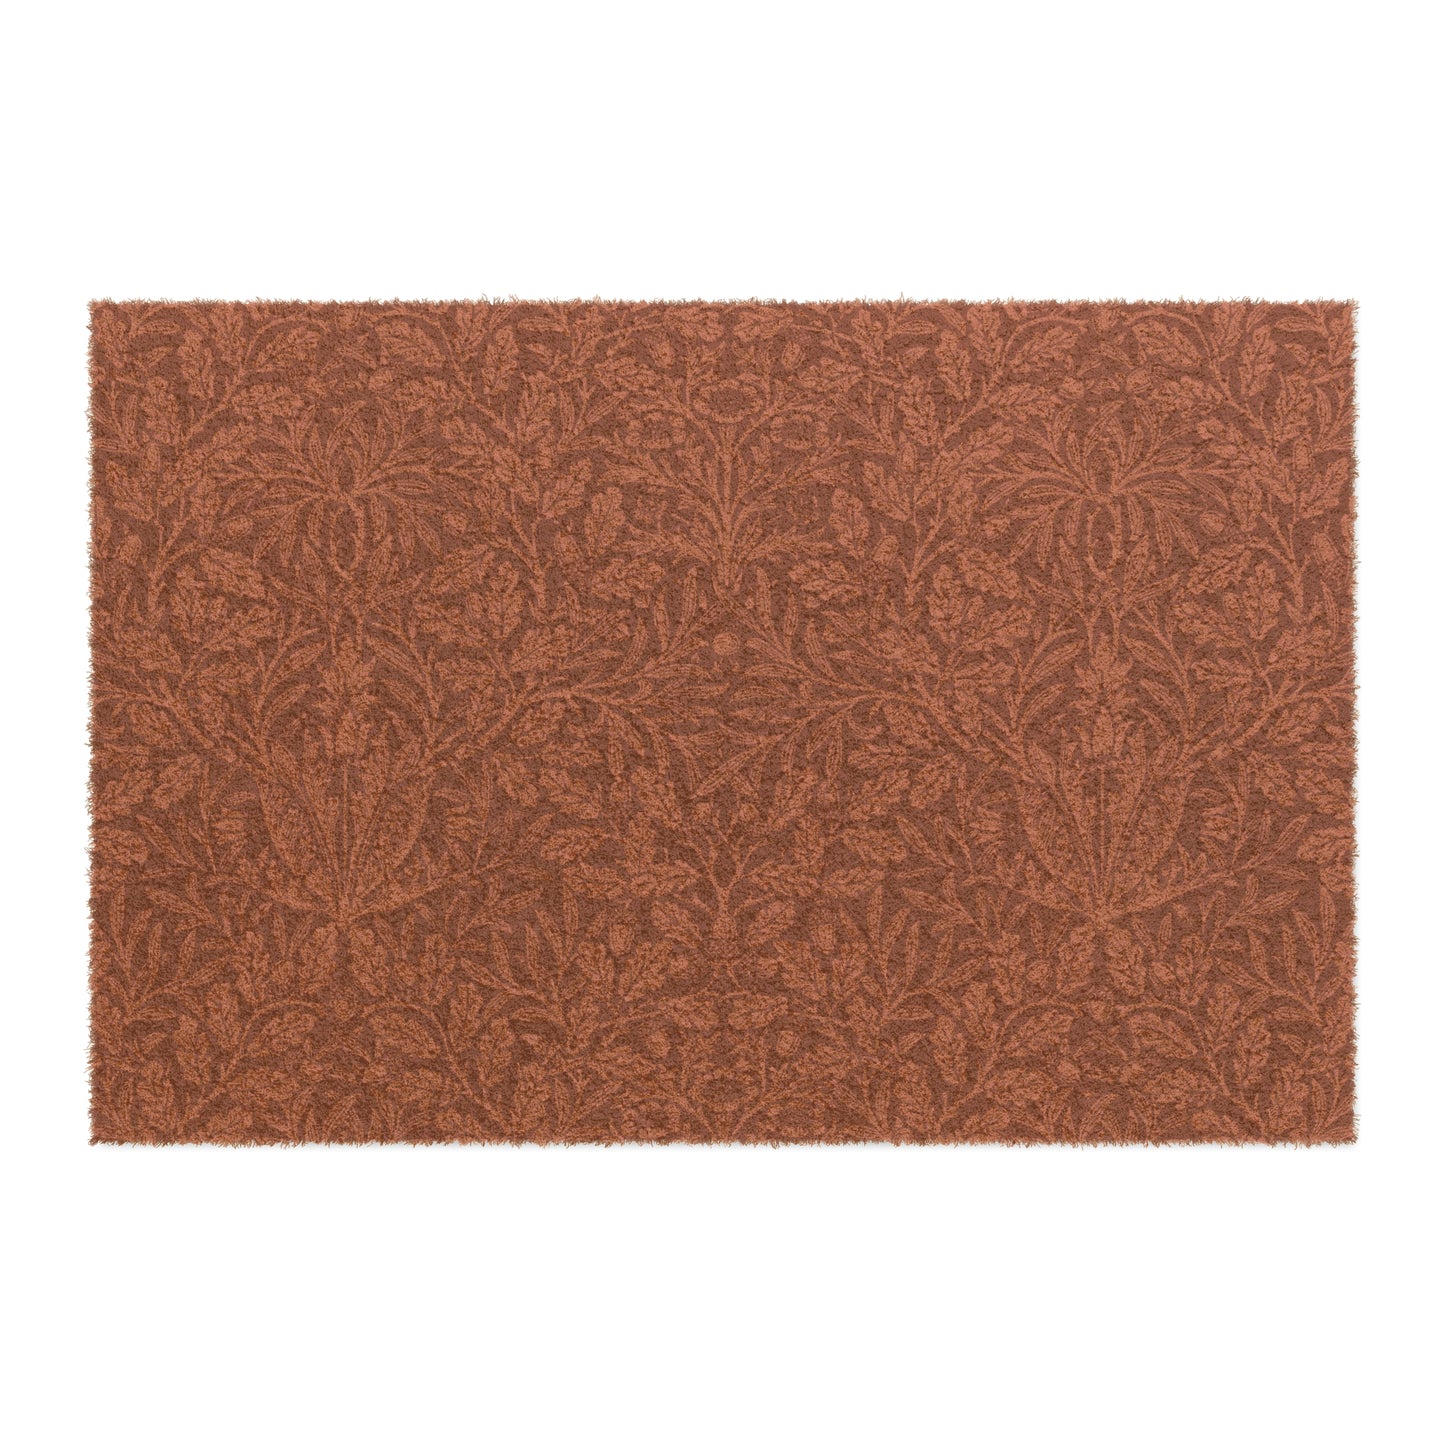 william-morris-co-coconut-coir-doormat-acorns-and-oak-leaves-collection-rust-1